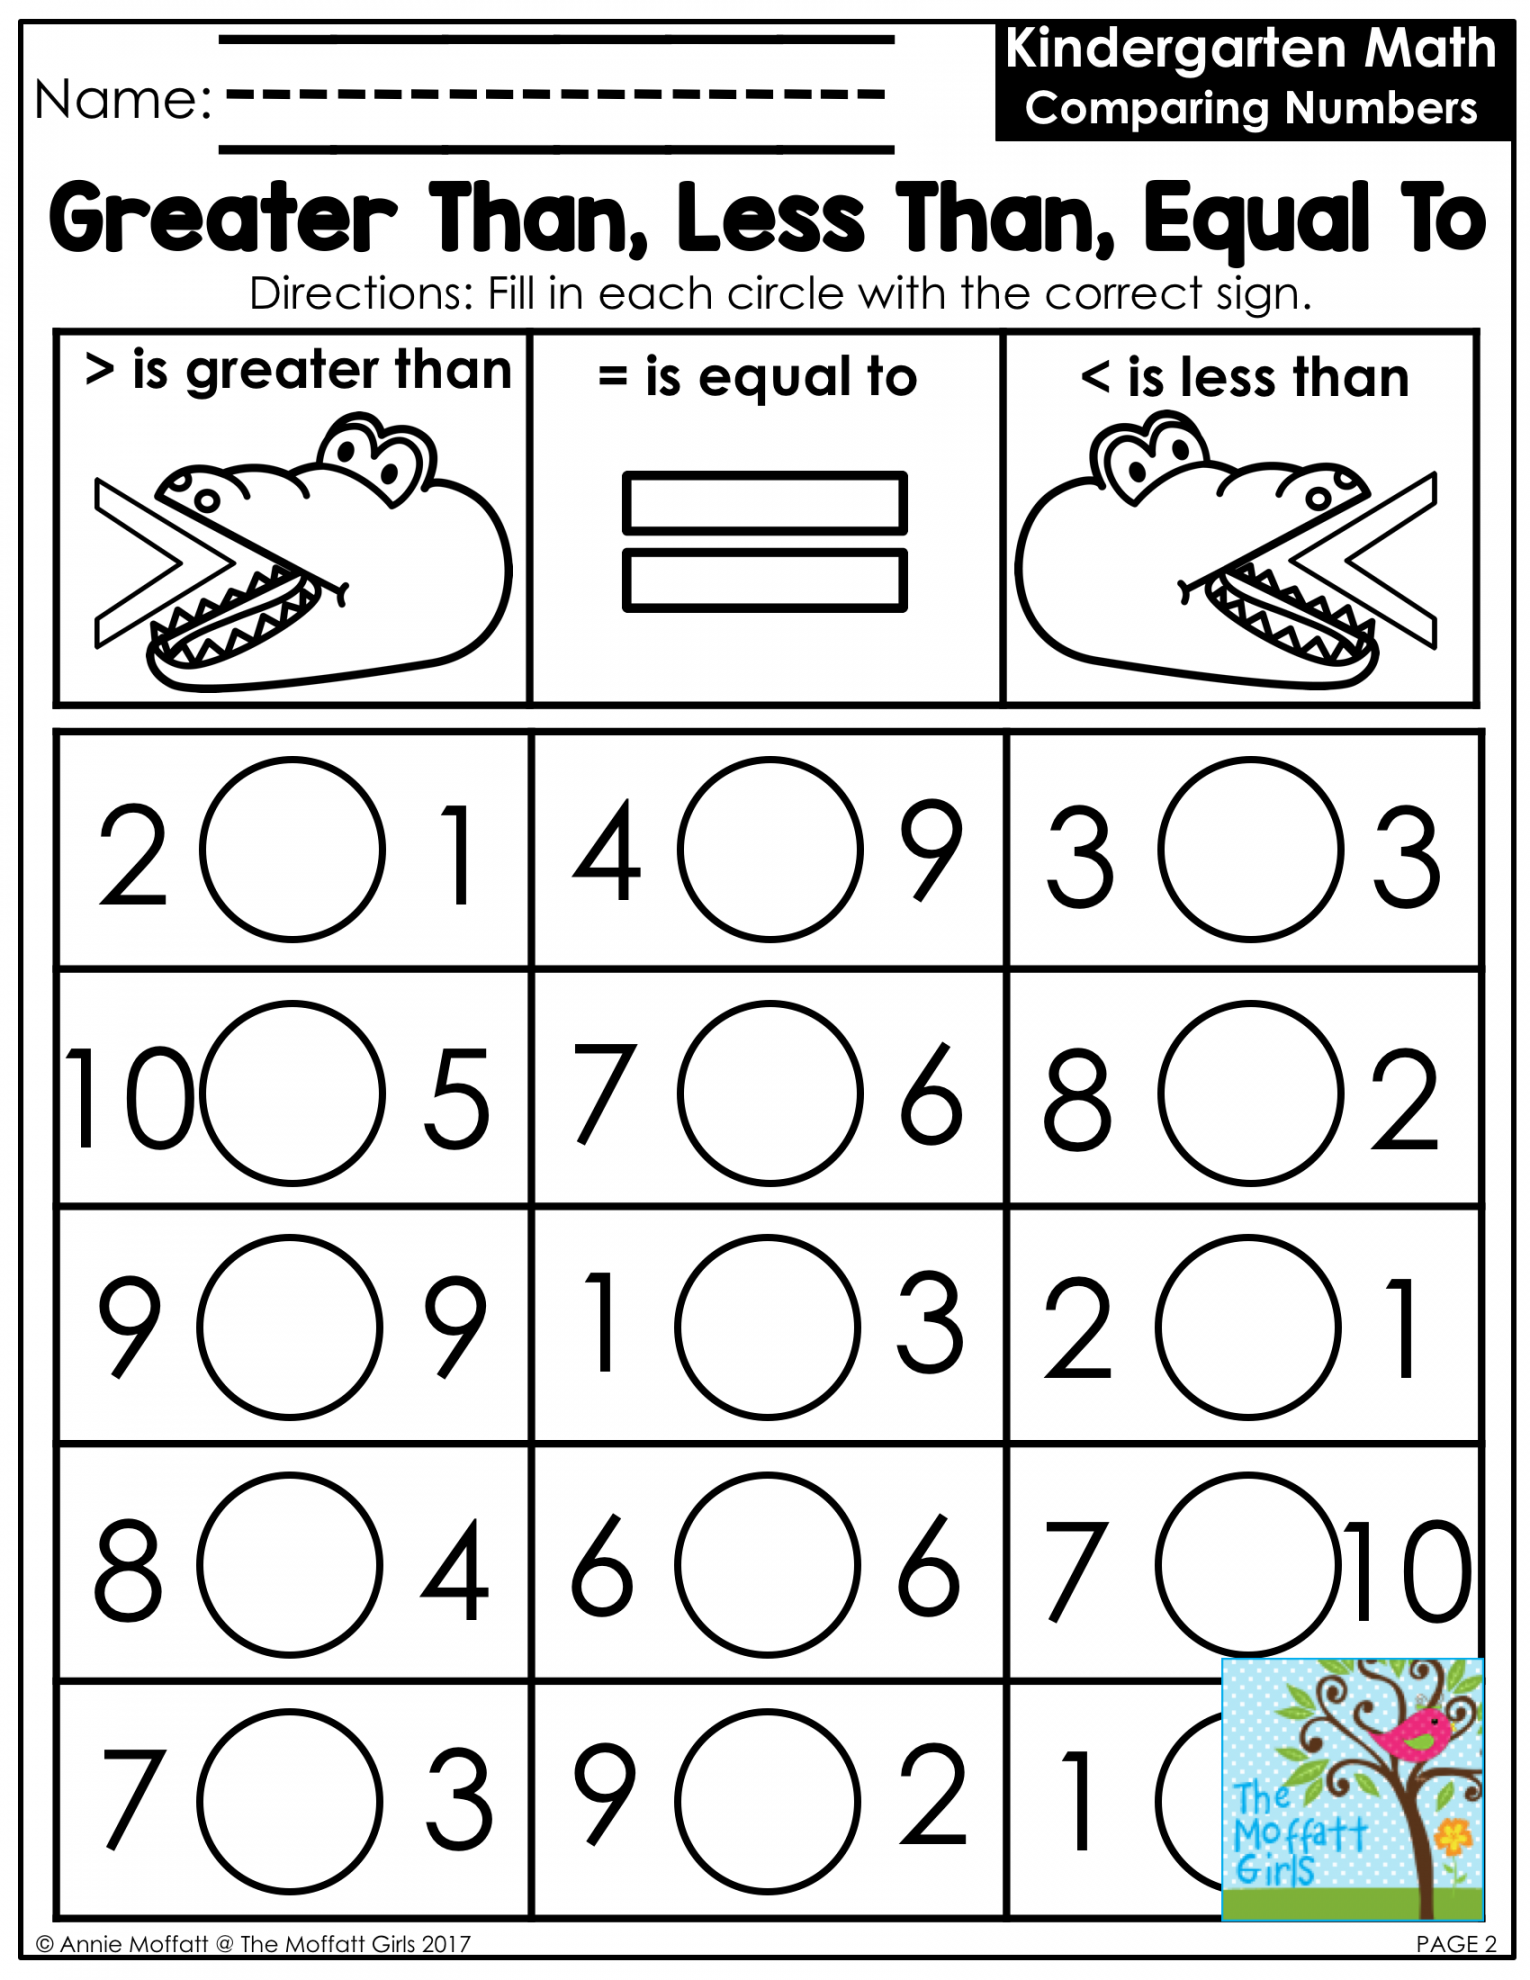 Kindergarten Math: Comparing Numbers  Kindergarten math